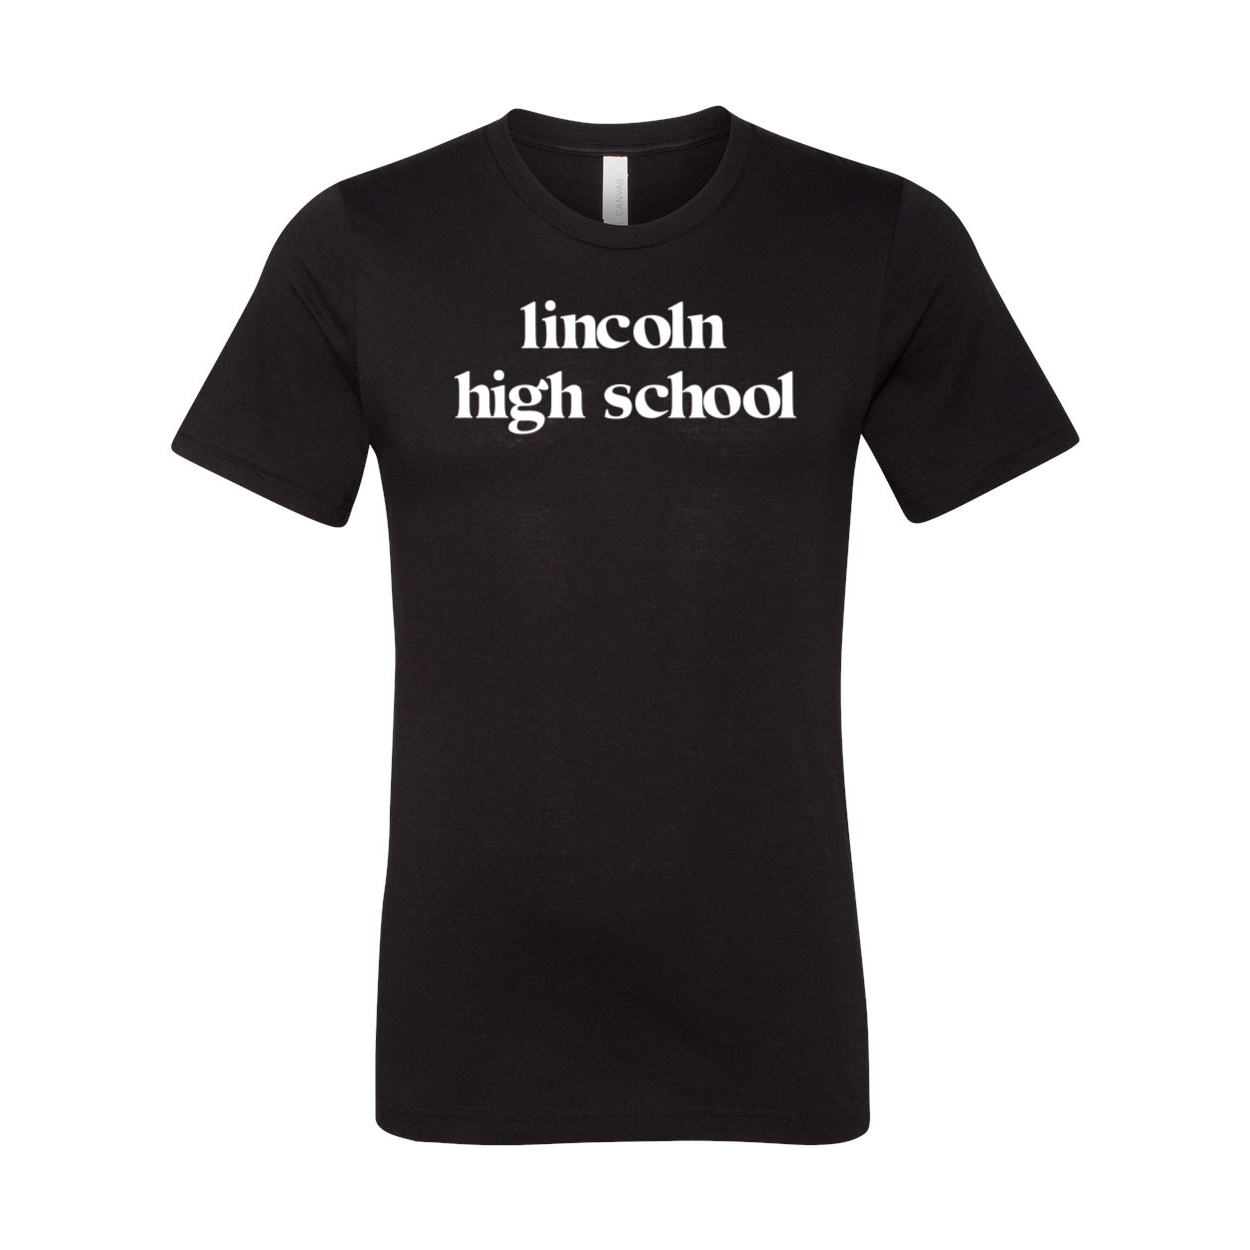 Lincoln High School Soft T-Shirt